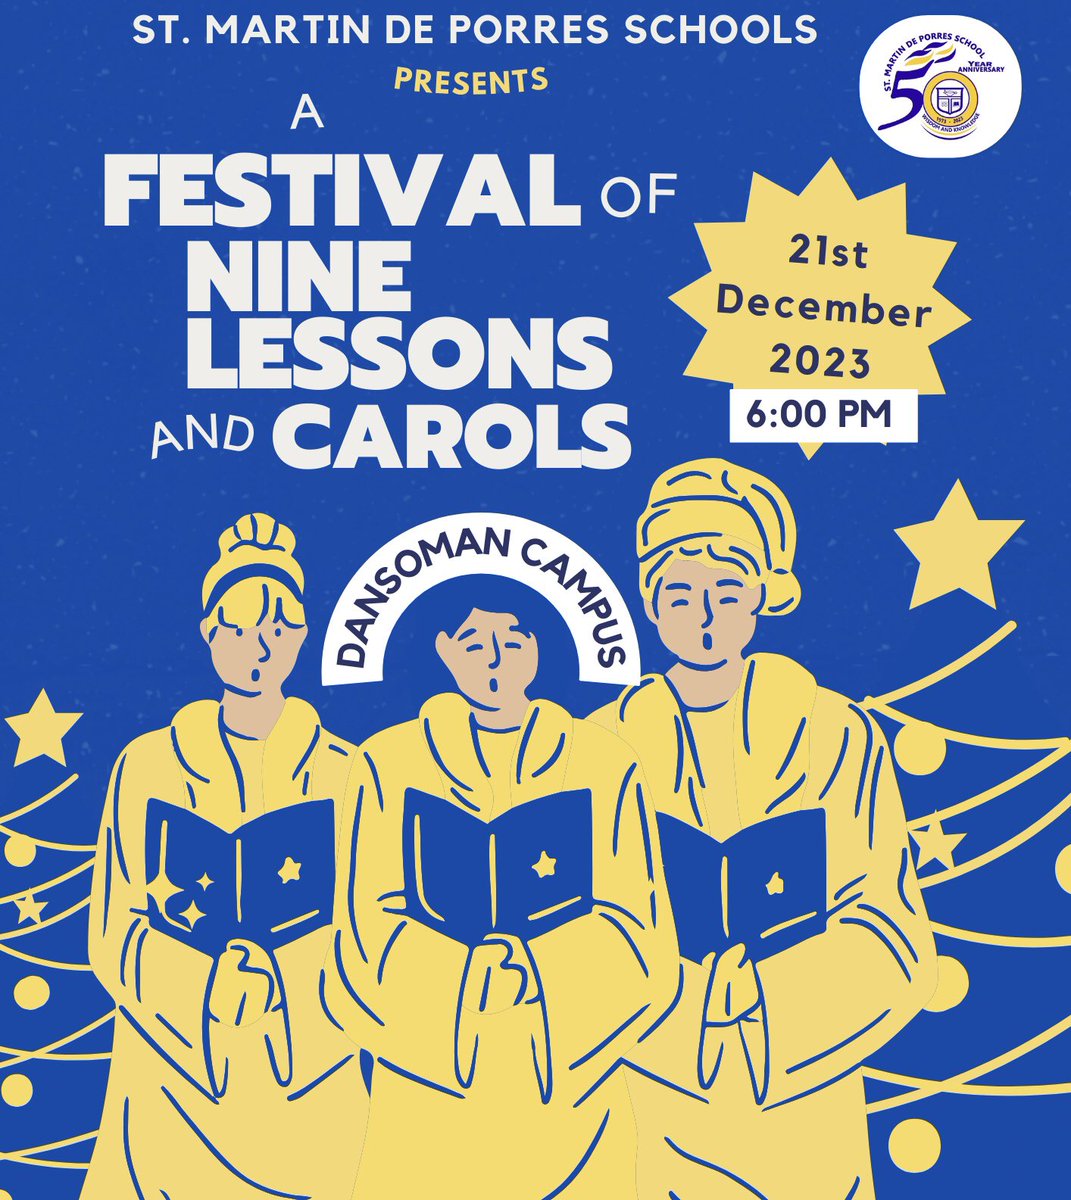 𝘿𝙀𝘾𝙀𝙈𝘽𝙀𝙍 𝙄𝙉 𝙎𝙈𝘿𝙋𝙎 🎄💛💙🎅

Angels are out tonight. Come catch a glimpse of them! 🪽👼💃☺️

SMDPS 𝓕𝓮𝓼𝓽𝓲𝓿𝓪𝓵 𝓸𝓯 𝓝𝓲𝓷𝓮 𝓛𝓮𝓼𝓼𝓸𝓷𝓼 𝓪𝓷𝓭 𝓒𝓪𝓻𝓸𝓵𝓼 

#Christmas #Carols #CarolsNight #NineLessons #Celebtrations #SMDPS  #Schools  #SMDPSat50